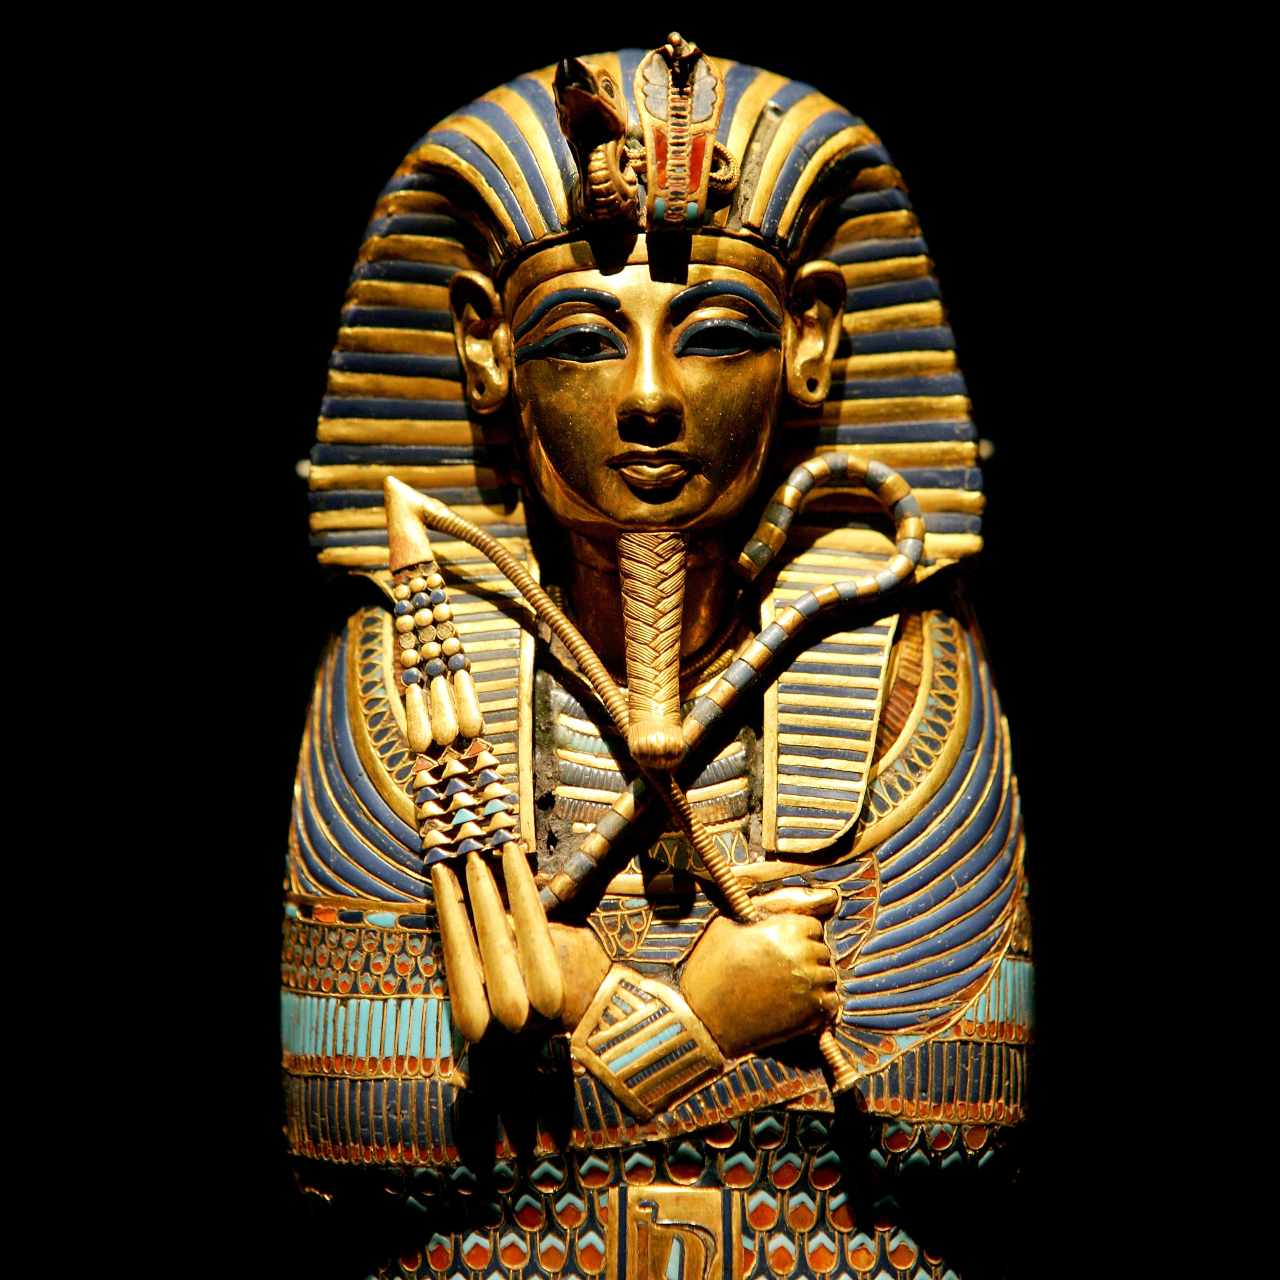 Fotografia do sarcófago de Tutancâmon